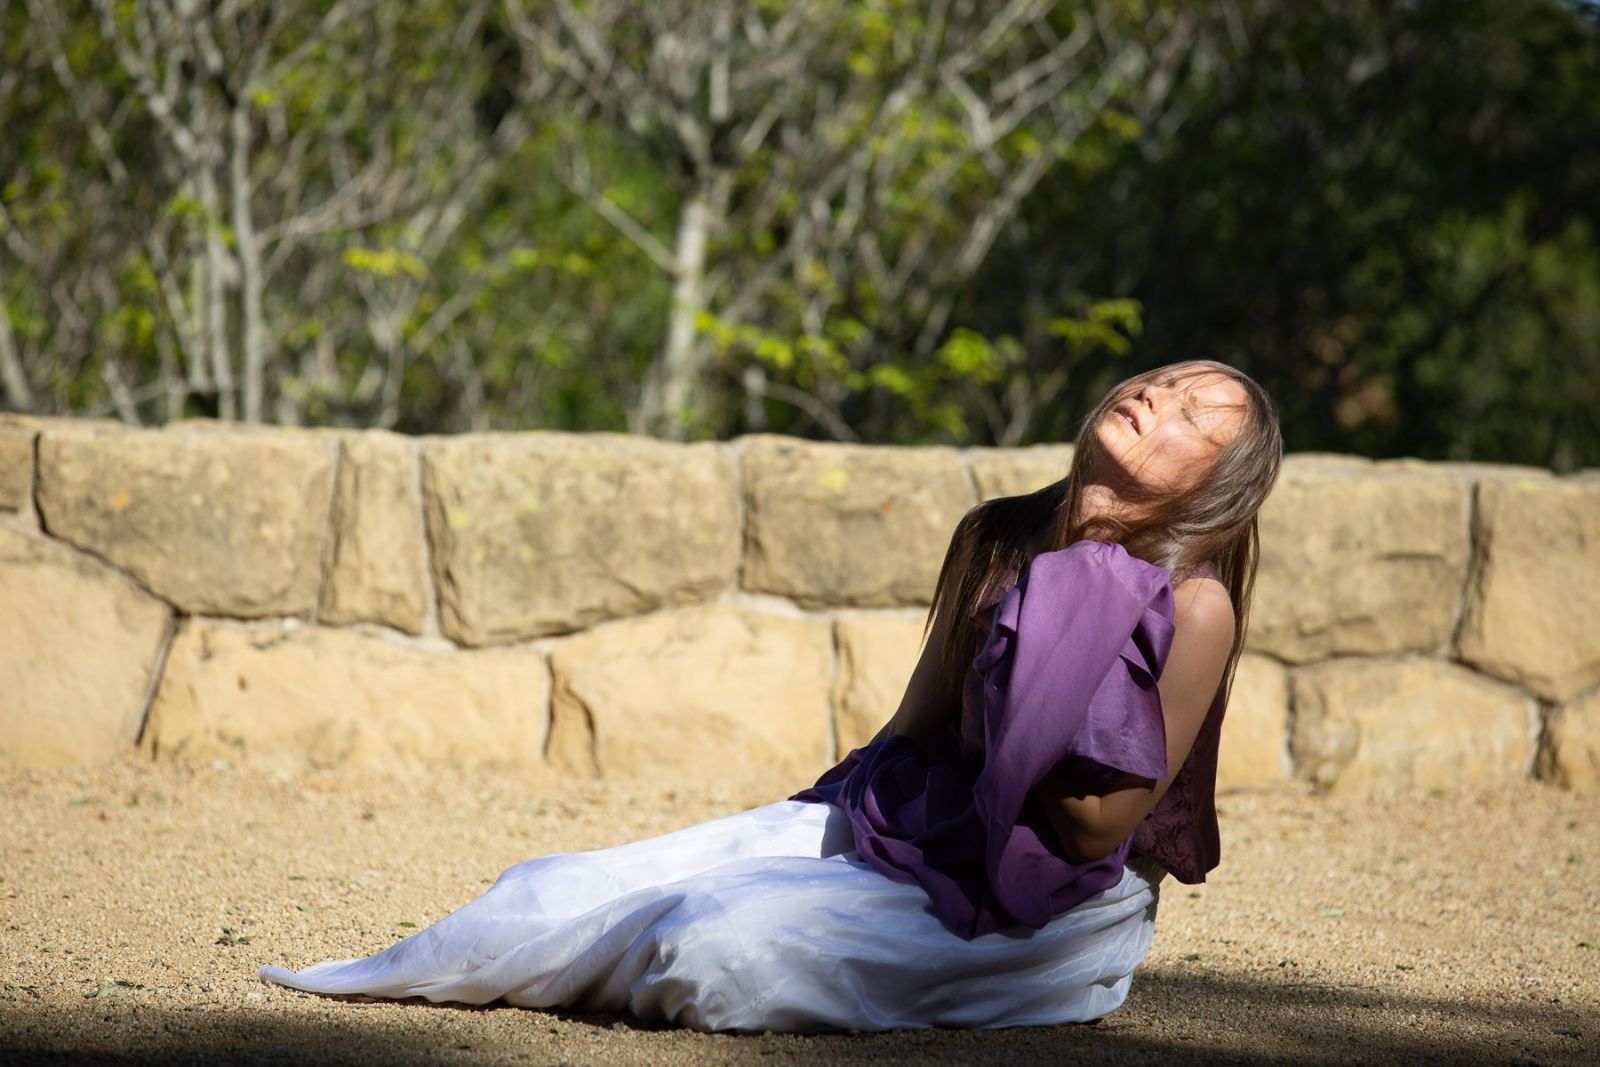 Figures 1 and 2. Meri Takkinen, dancing in an outdoor amphitheater in Santa Barbara, CA. Photos by Kenji Fukudome.